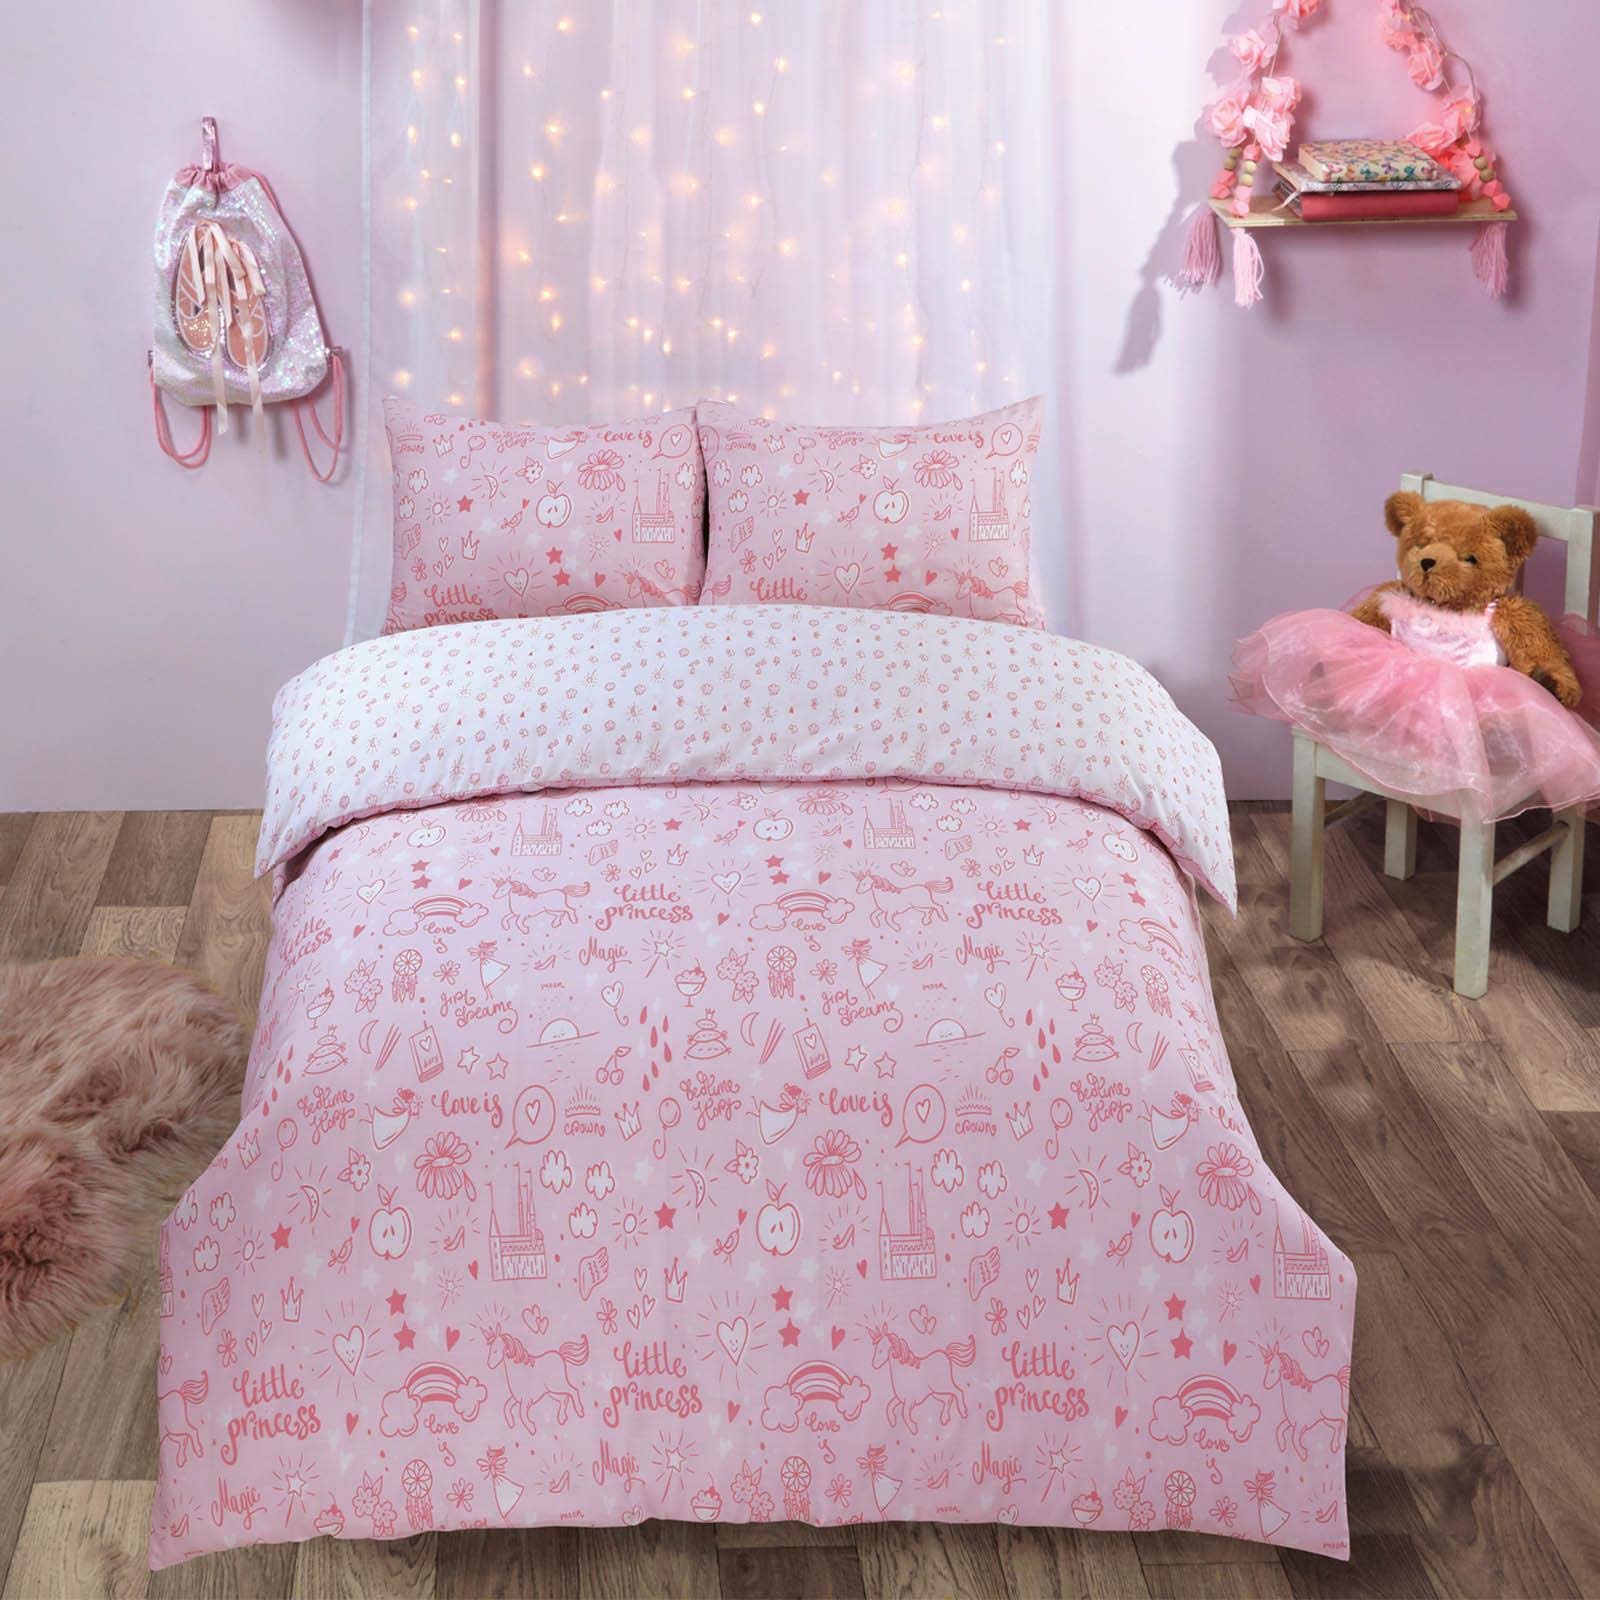 Dreamscene Unicorn Castle Duvet Cover with Pillowcase Reversible Little Princess Rainbow Kids Bedding Set, Blush Pink White, Junior/Cot